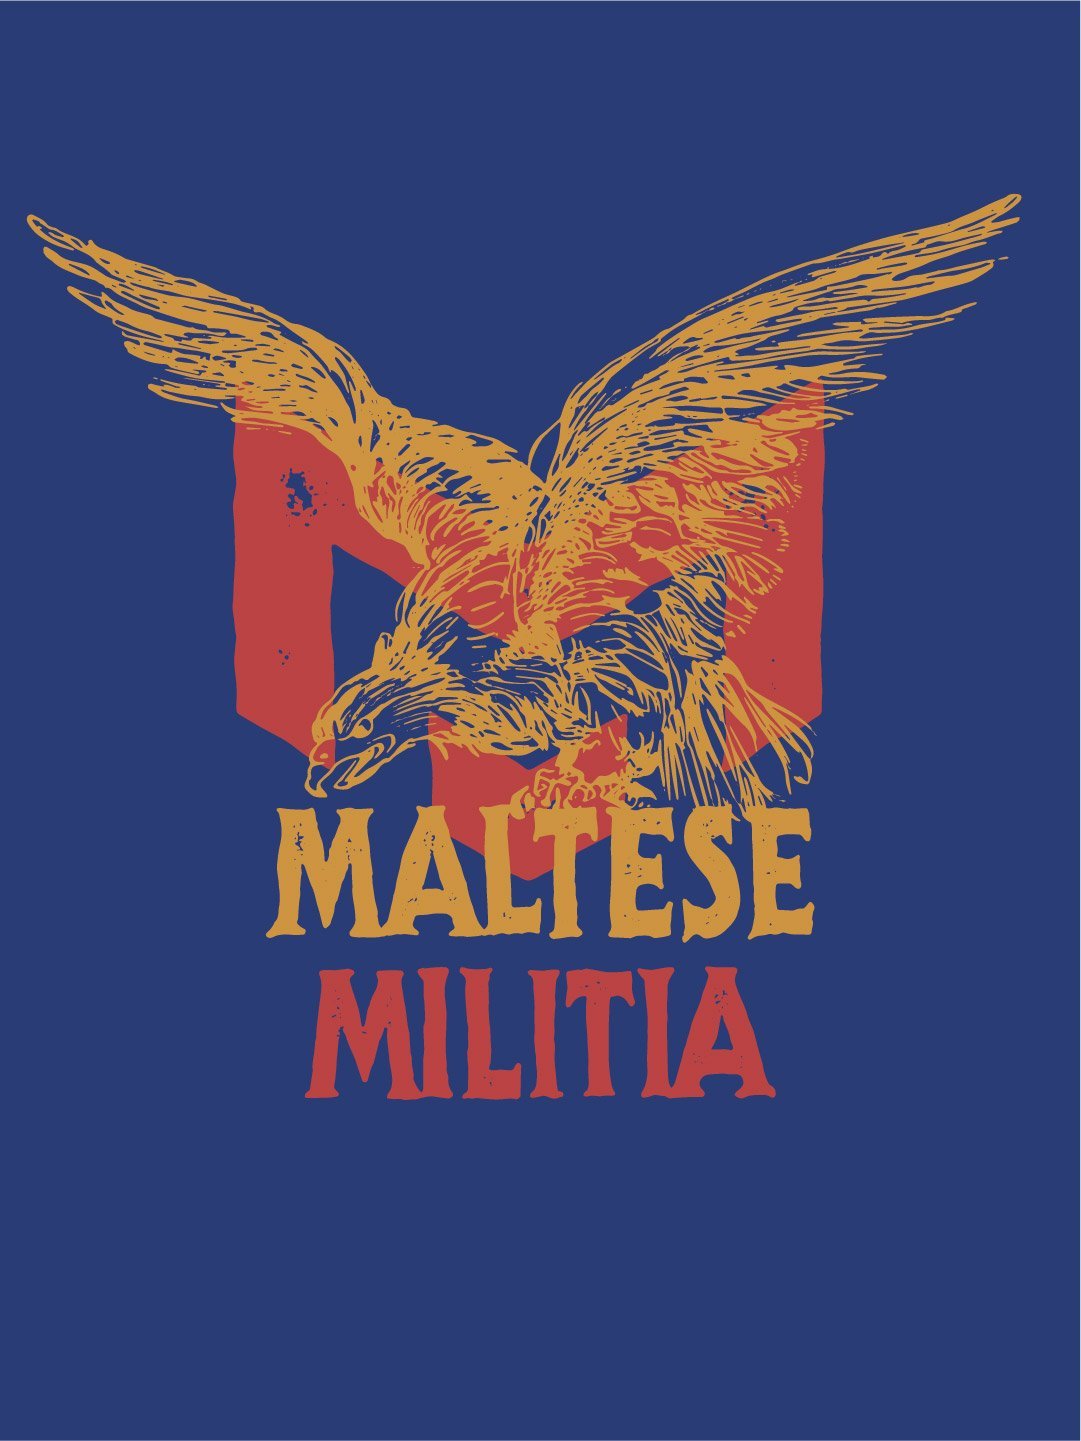 Maltese Militia Shirt Design by Jeff Finlley